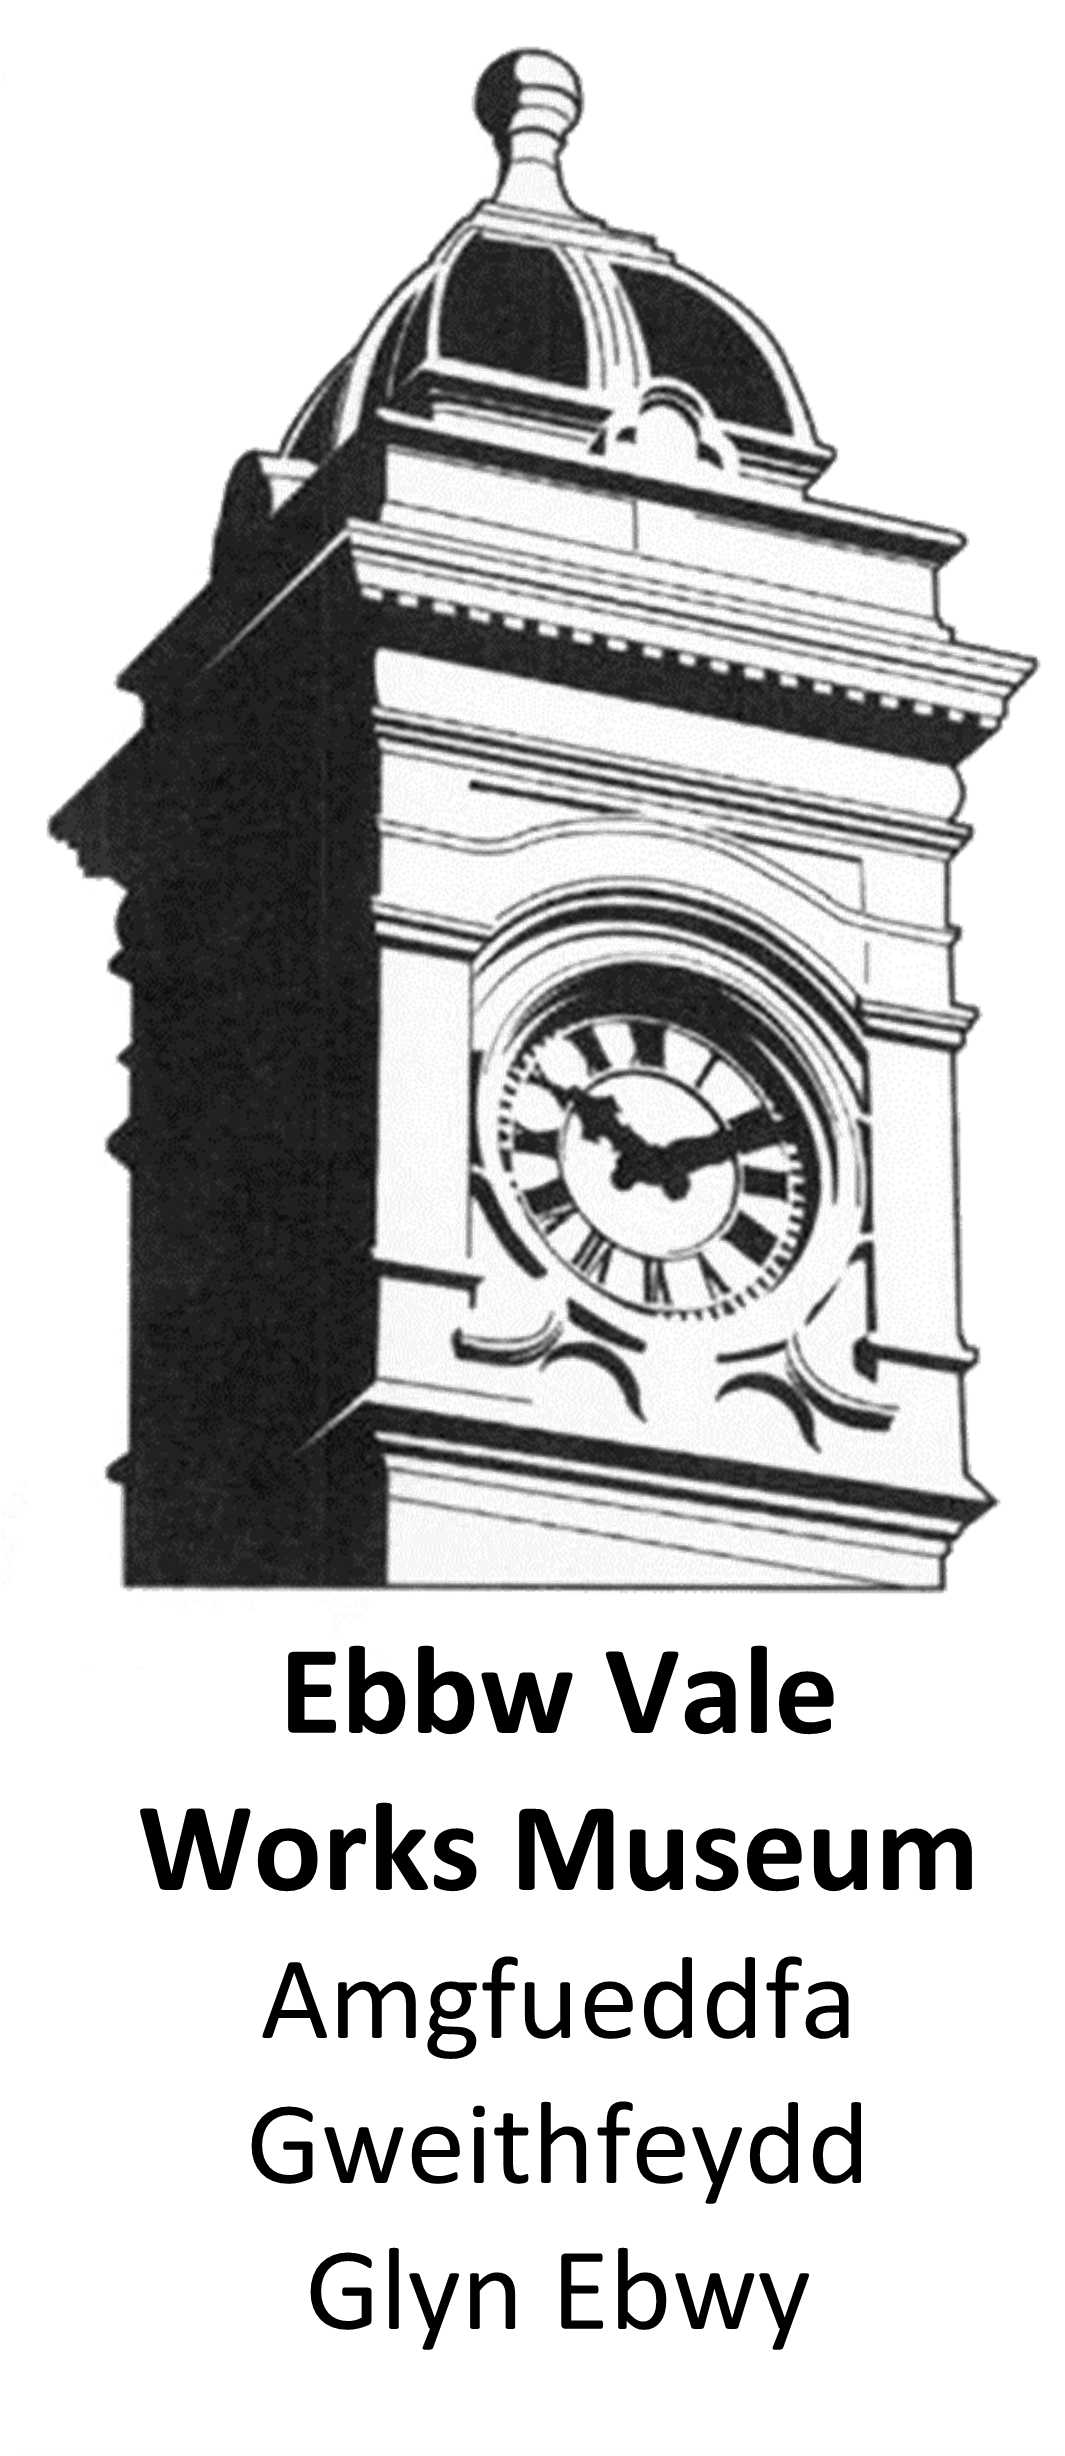 Ebbw Vale Works Museum